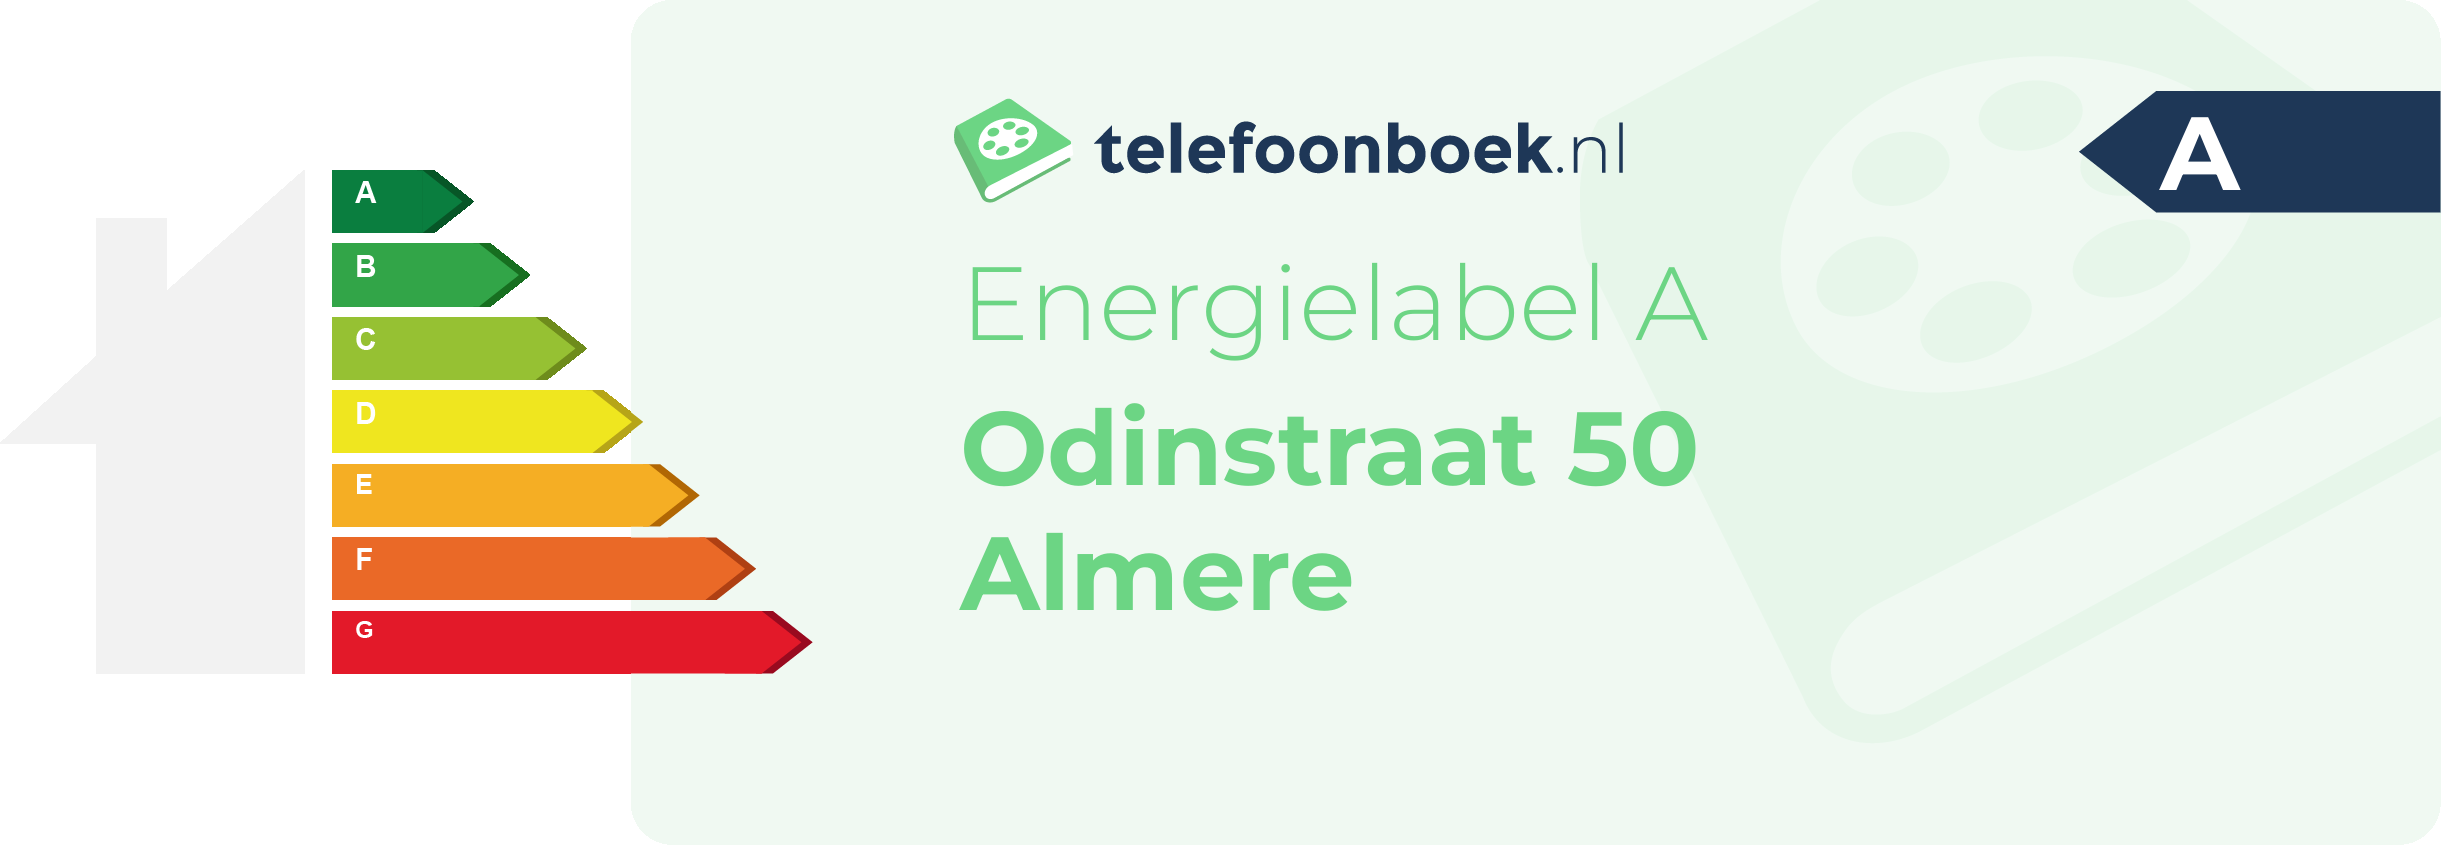 Energielabel Odinstraat 50 Almere